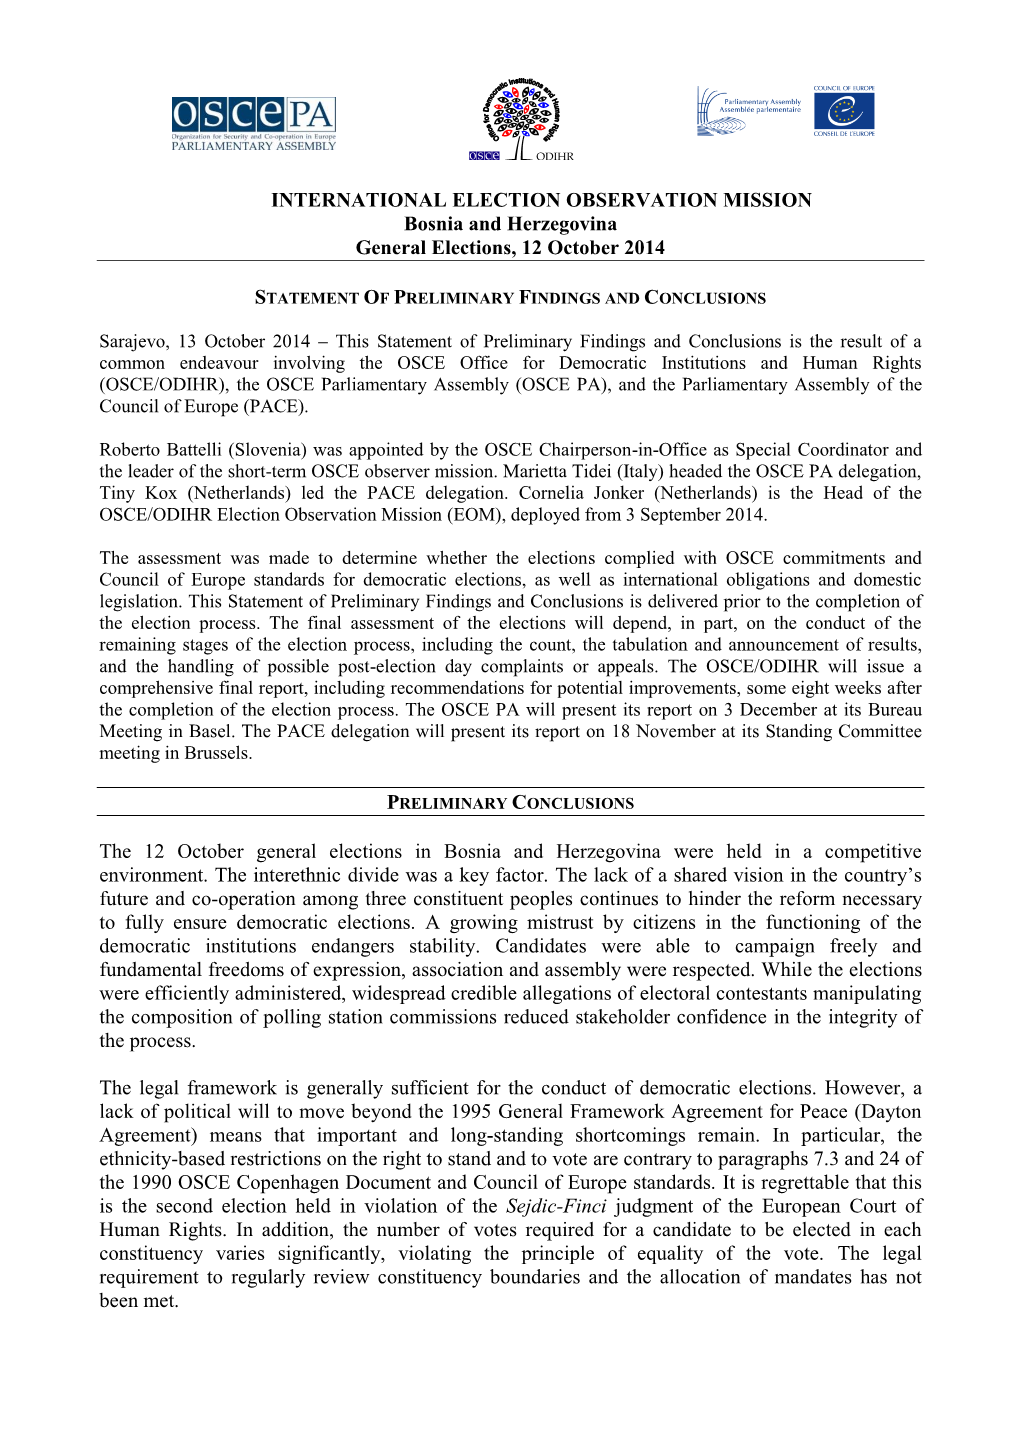 INTERNATIONAL ELECTION OBSERVATION MISSION Bosnia and Herzegovina General Elections, 12 October 2014